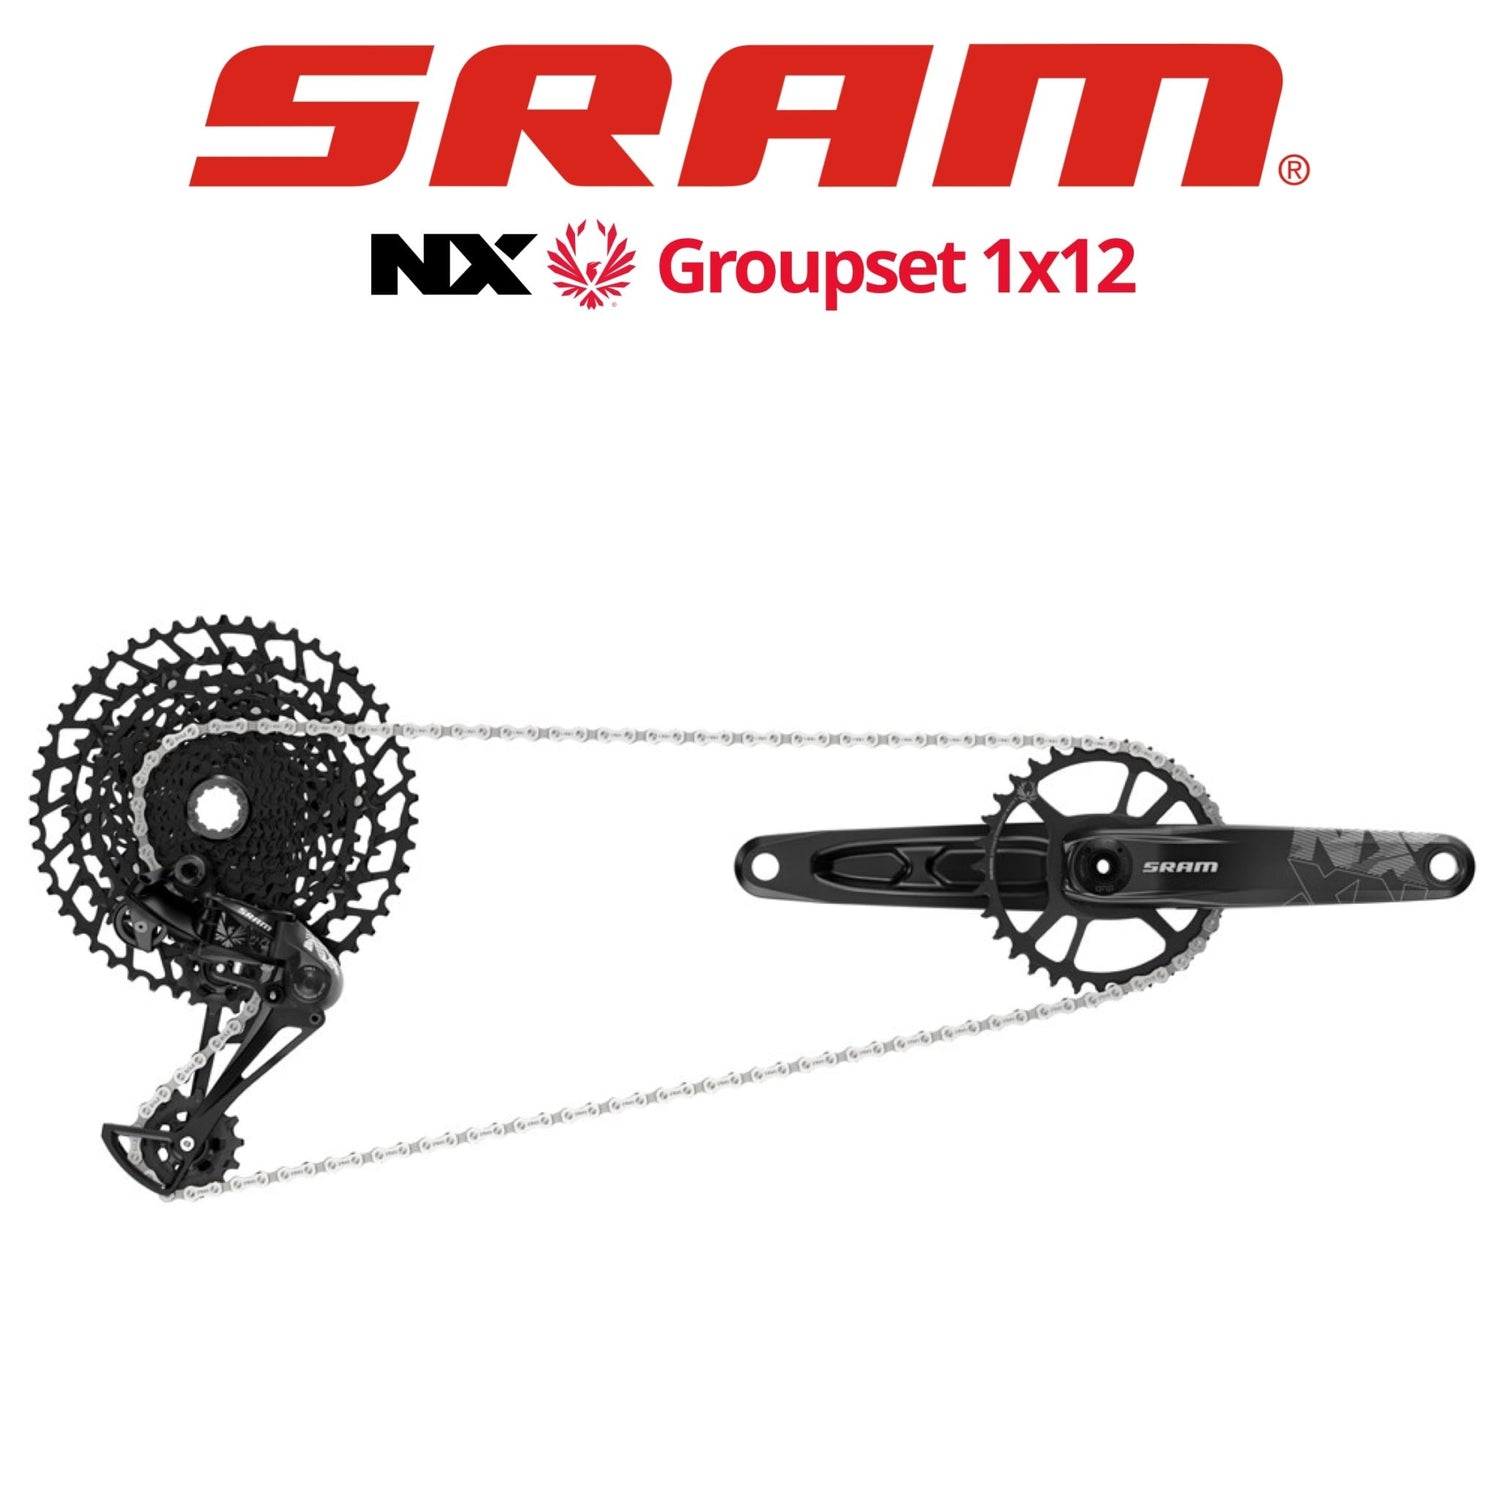 SRAM NX Eagle Groupset, 1x12, with crankset